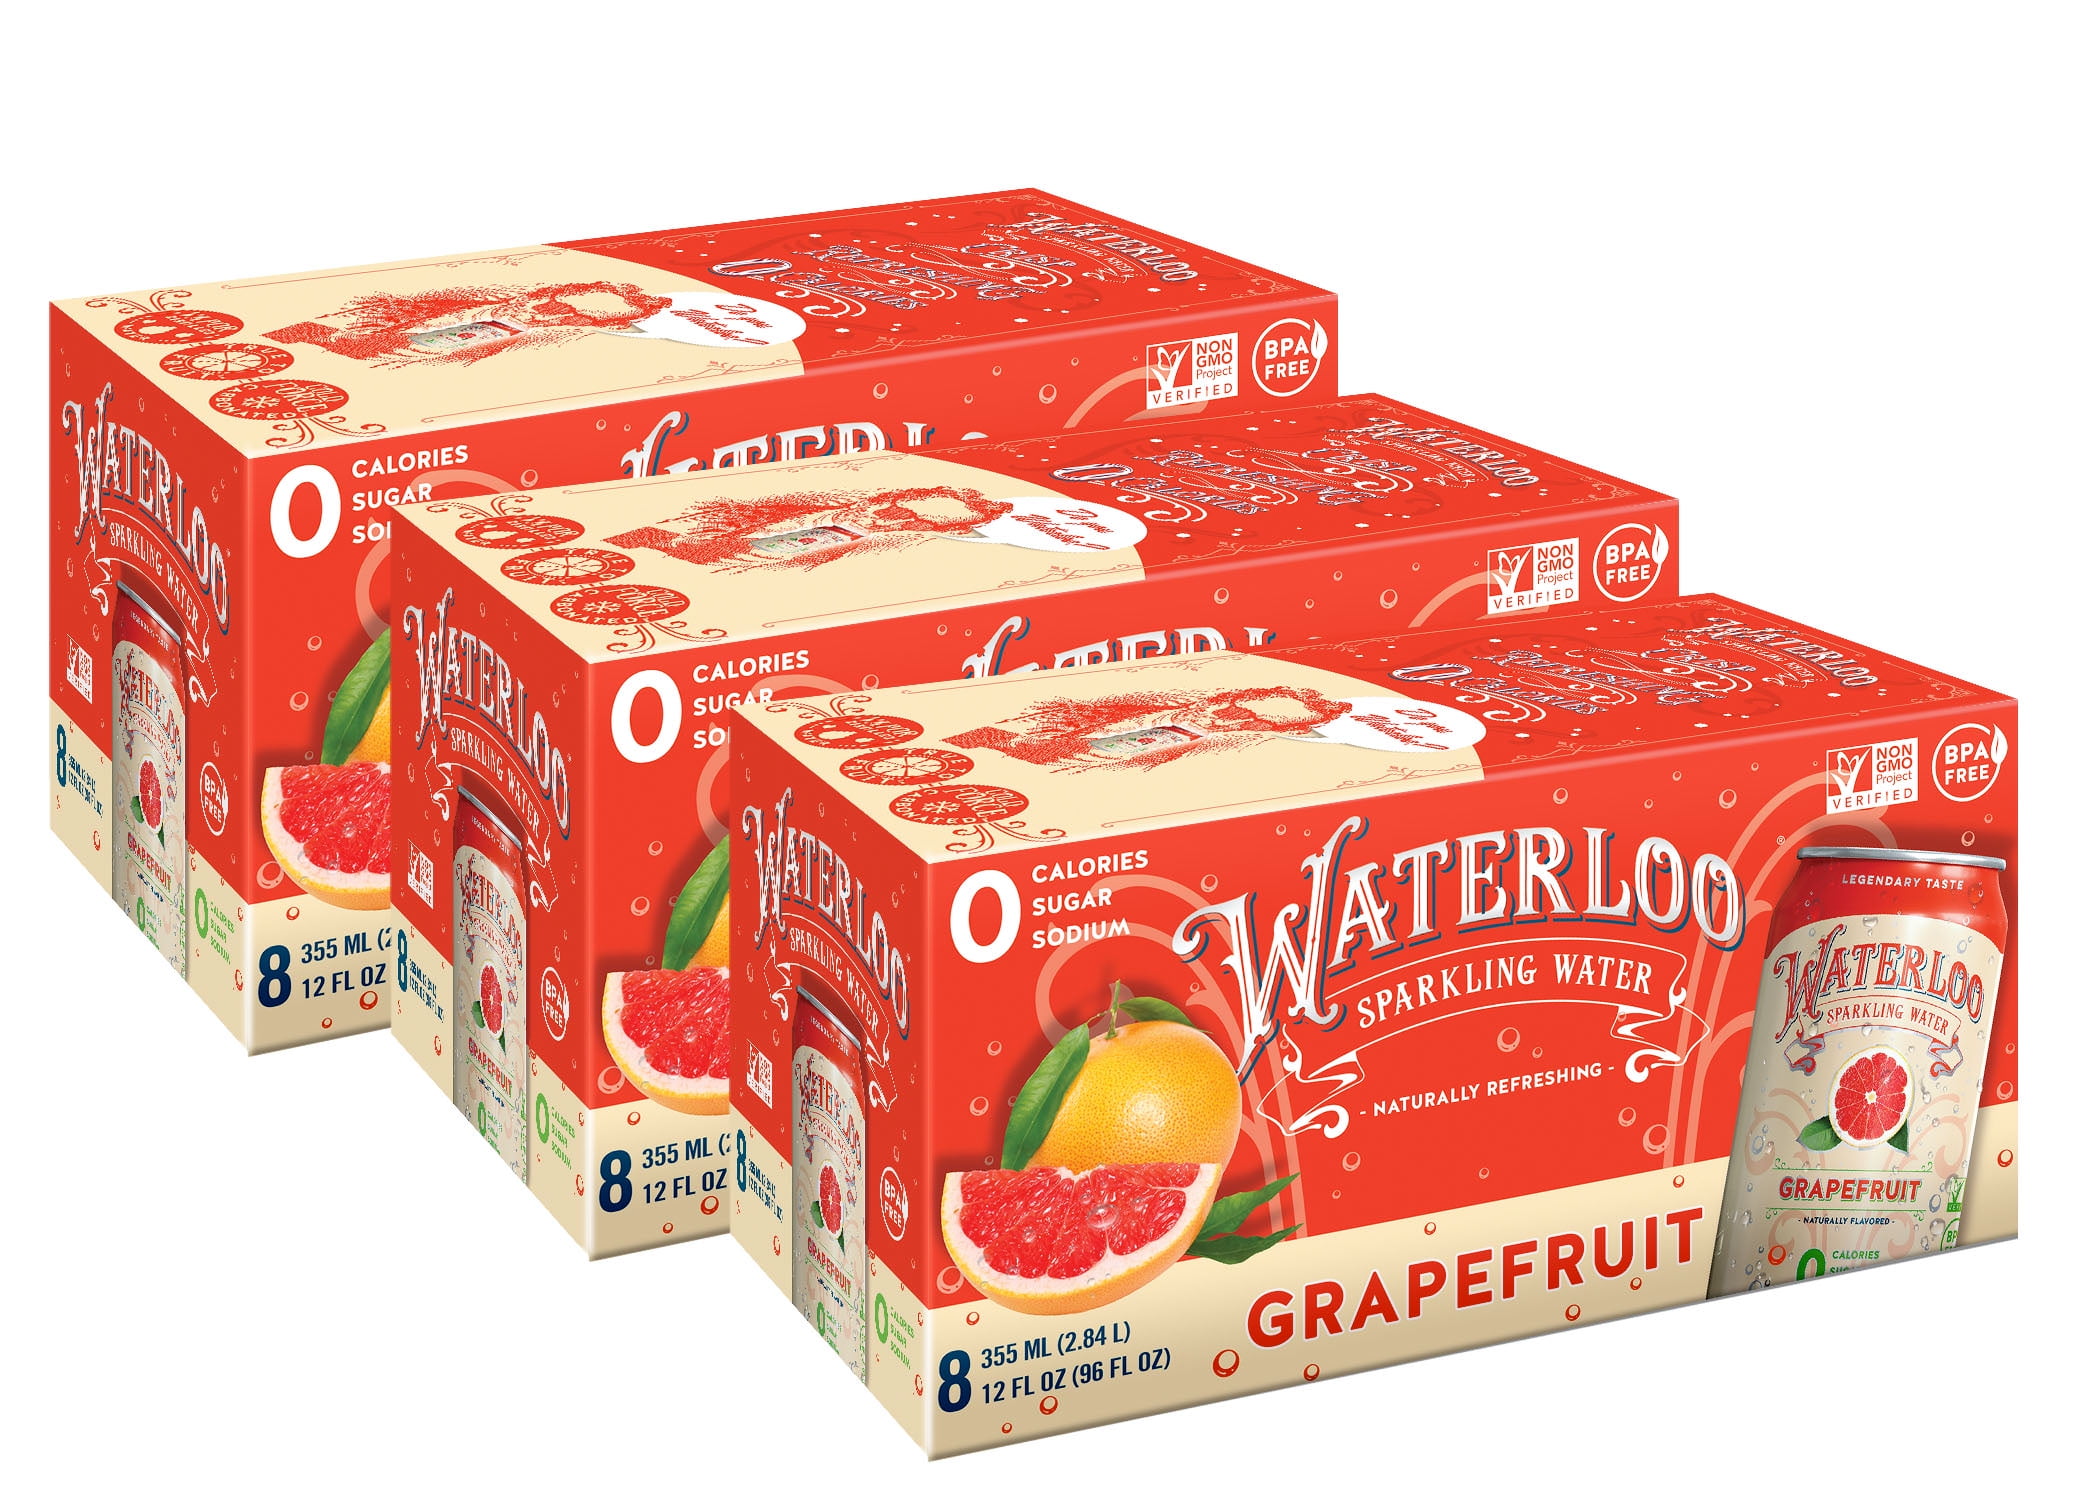 Waterloo Sparkling Water Grapefruit 12 Fl Oz 24 Ct Walmart 